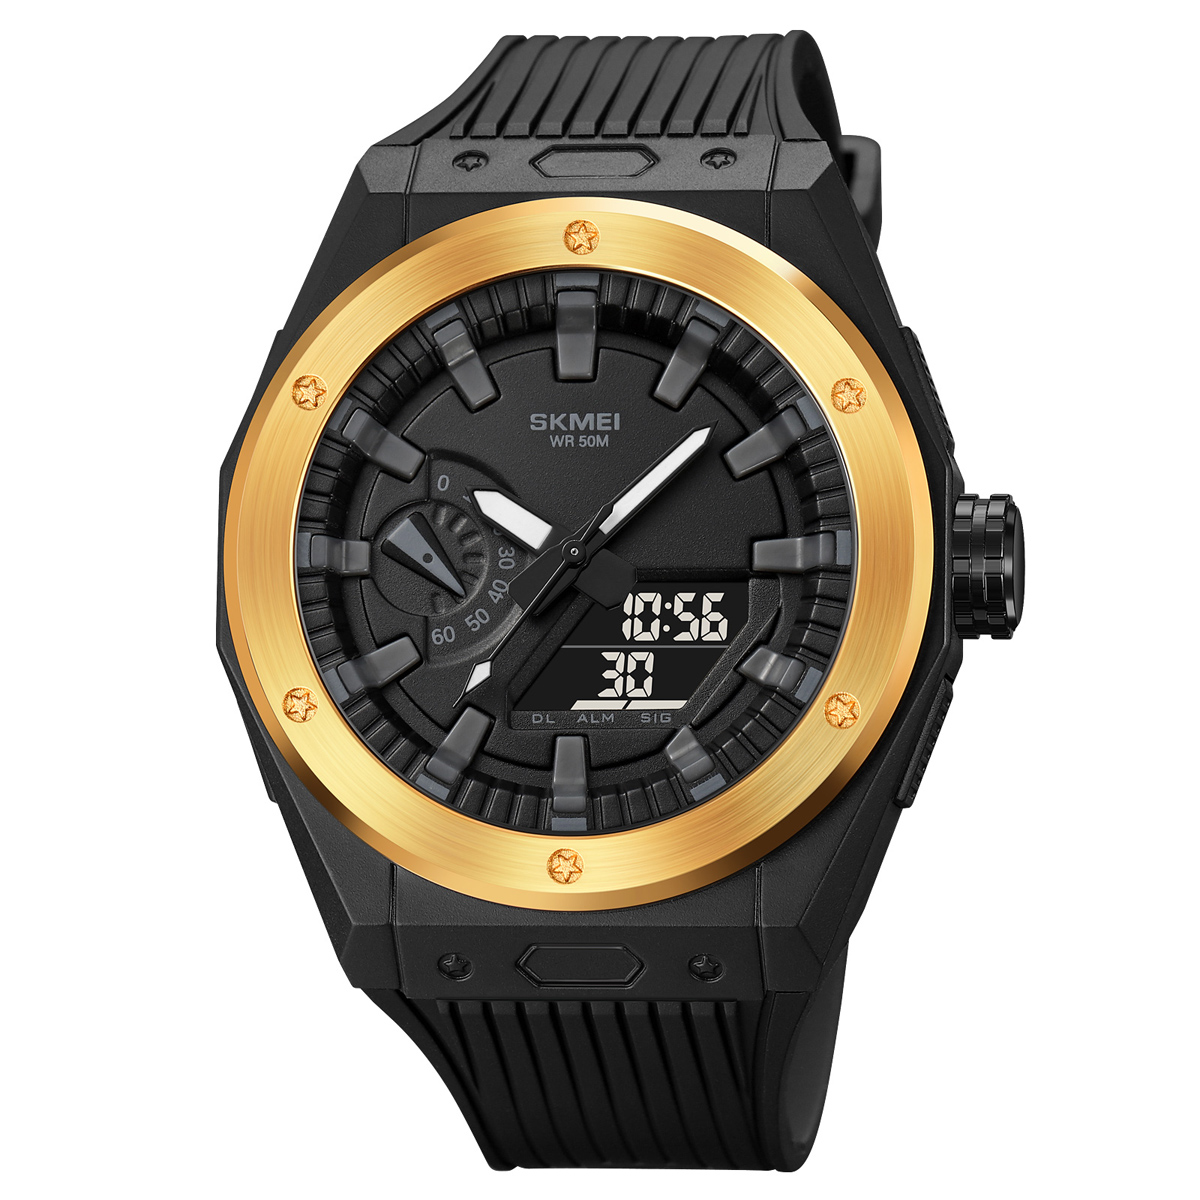 waterproof analog digital watches-Skmei Watch Manufacture Co.,Ltd